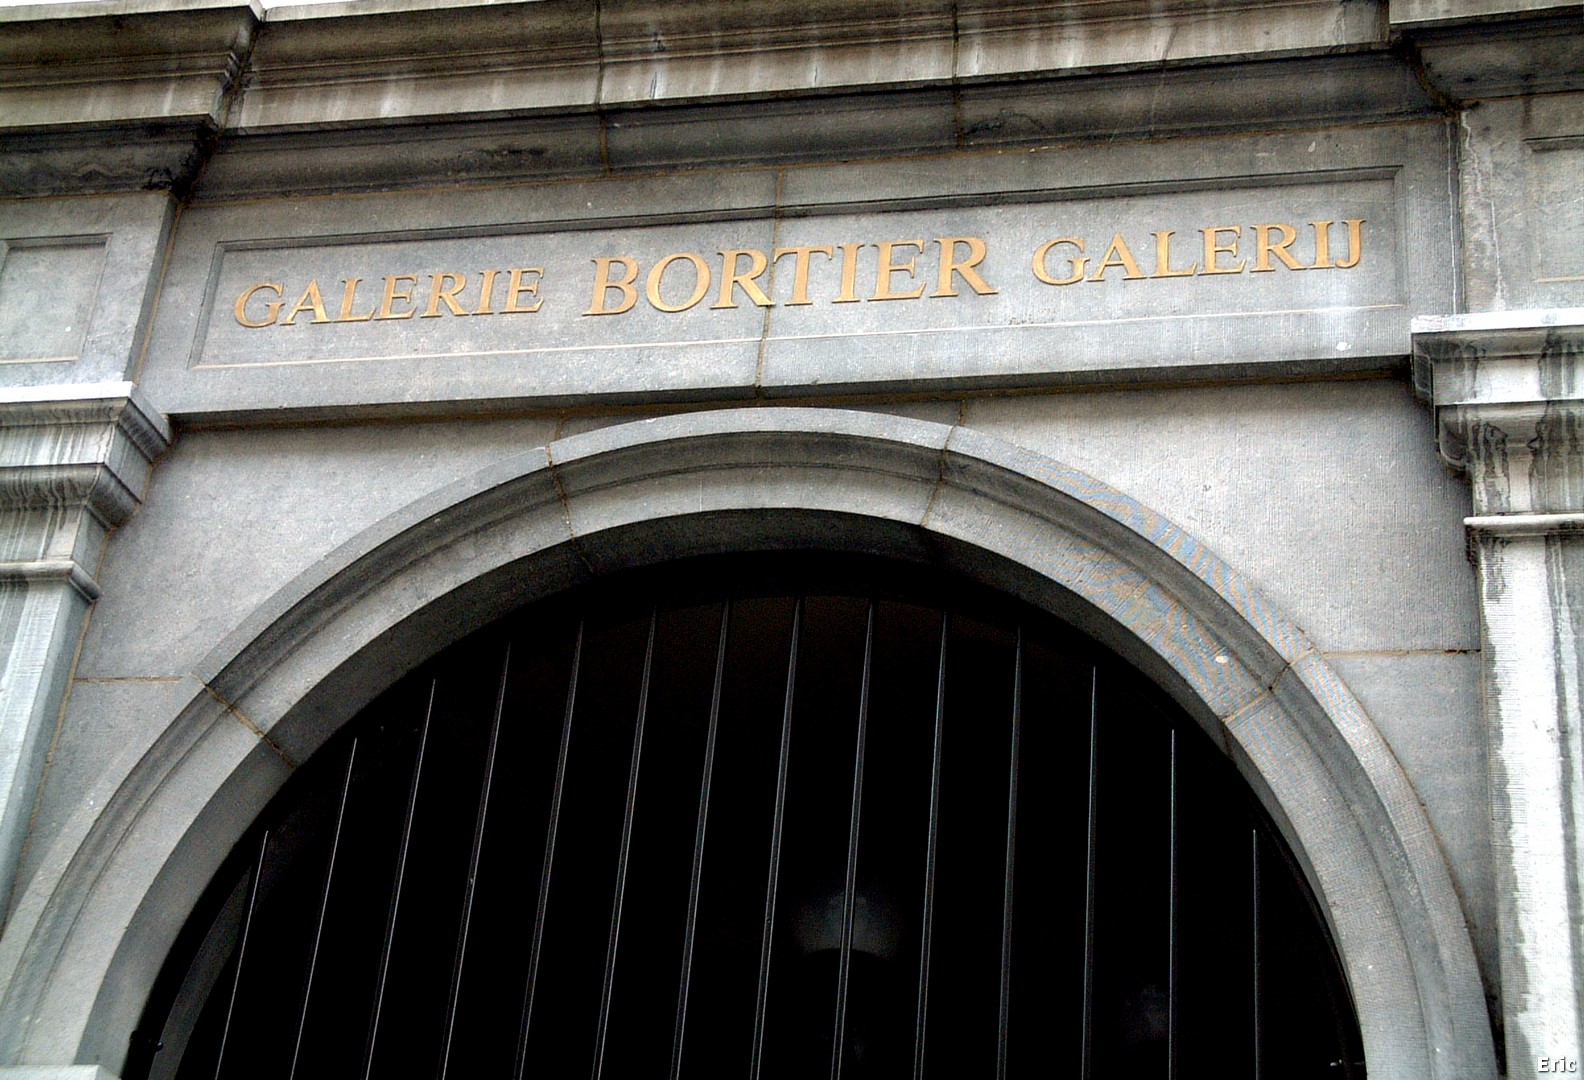 Galerie Bortier